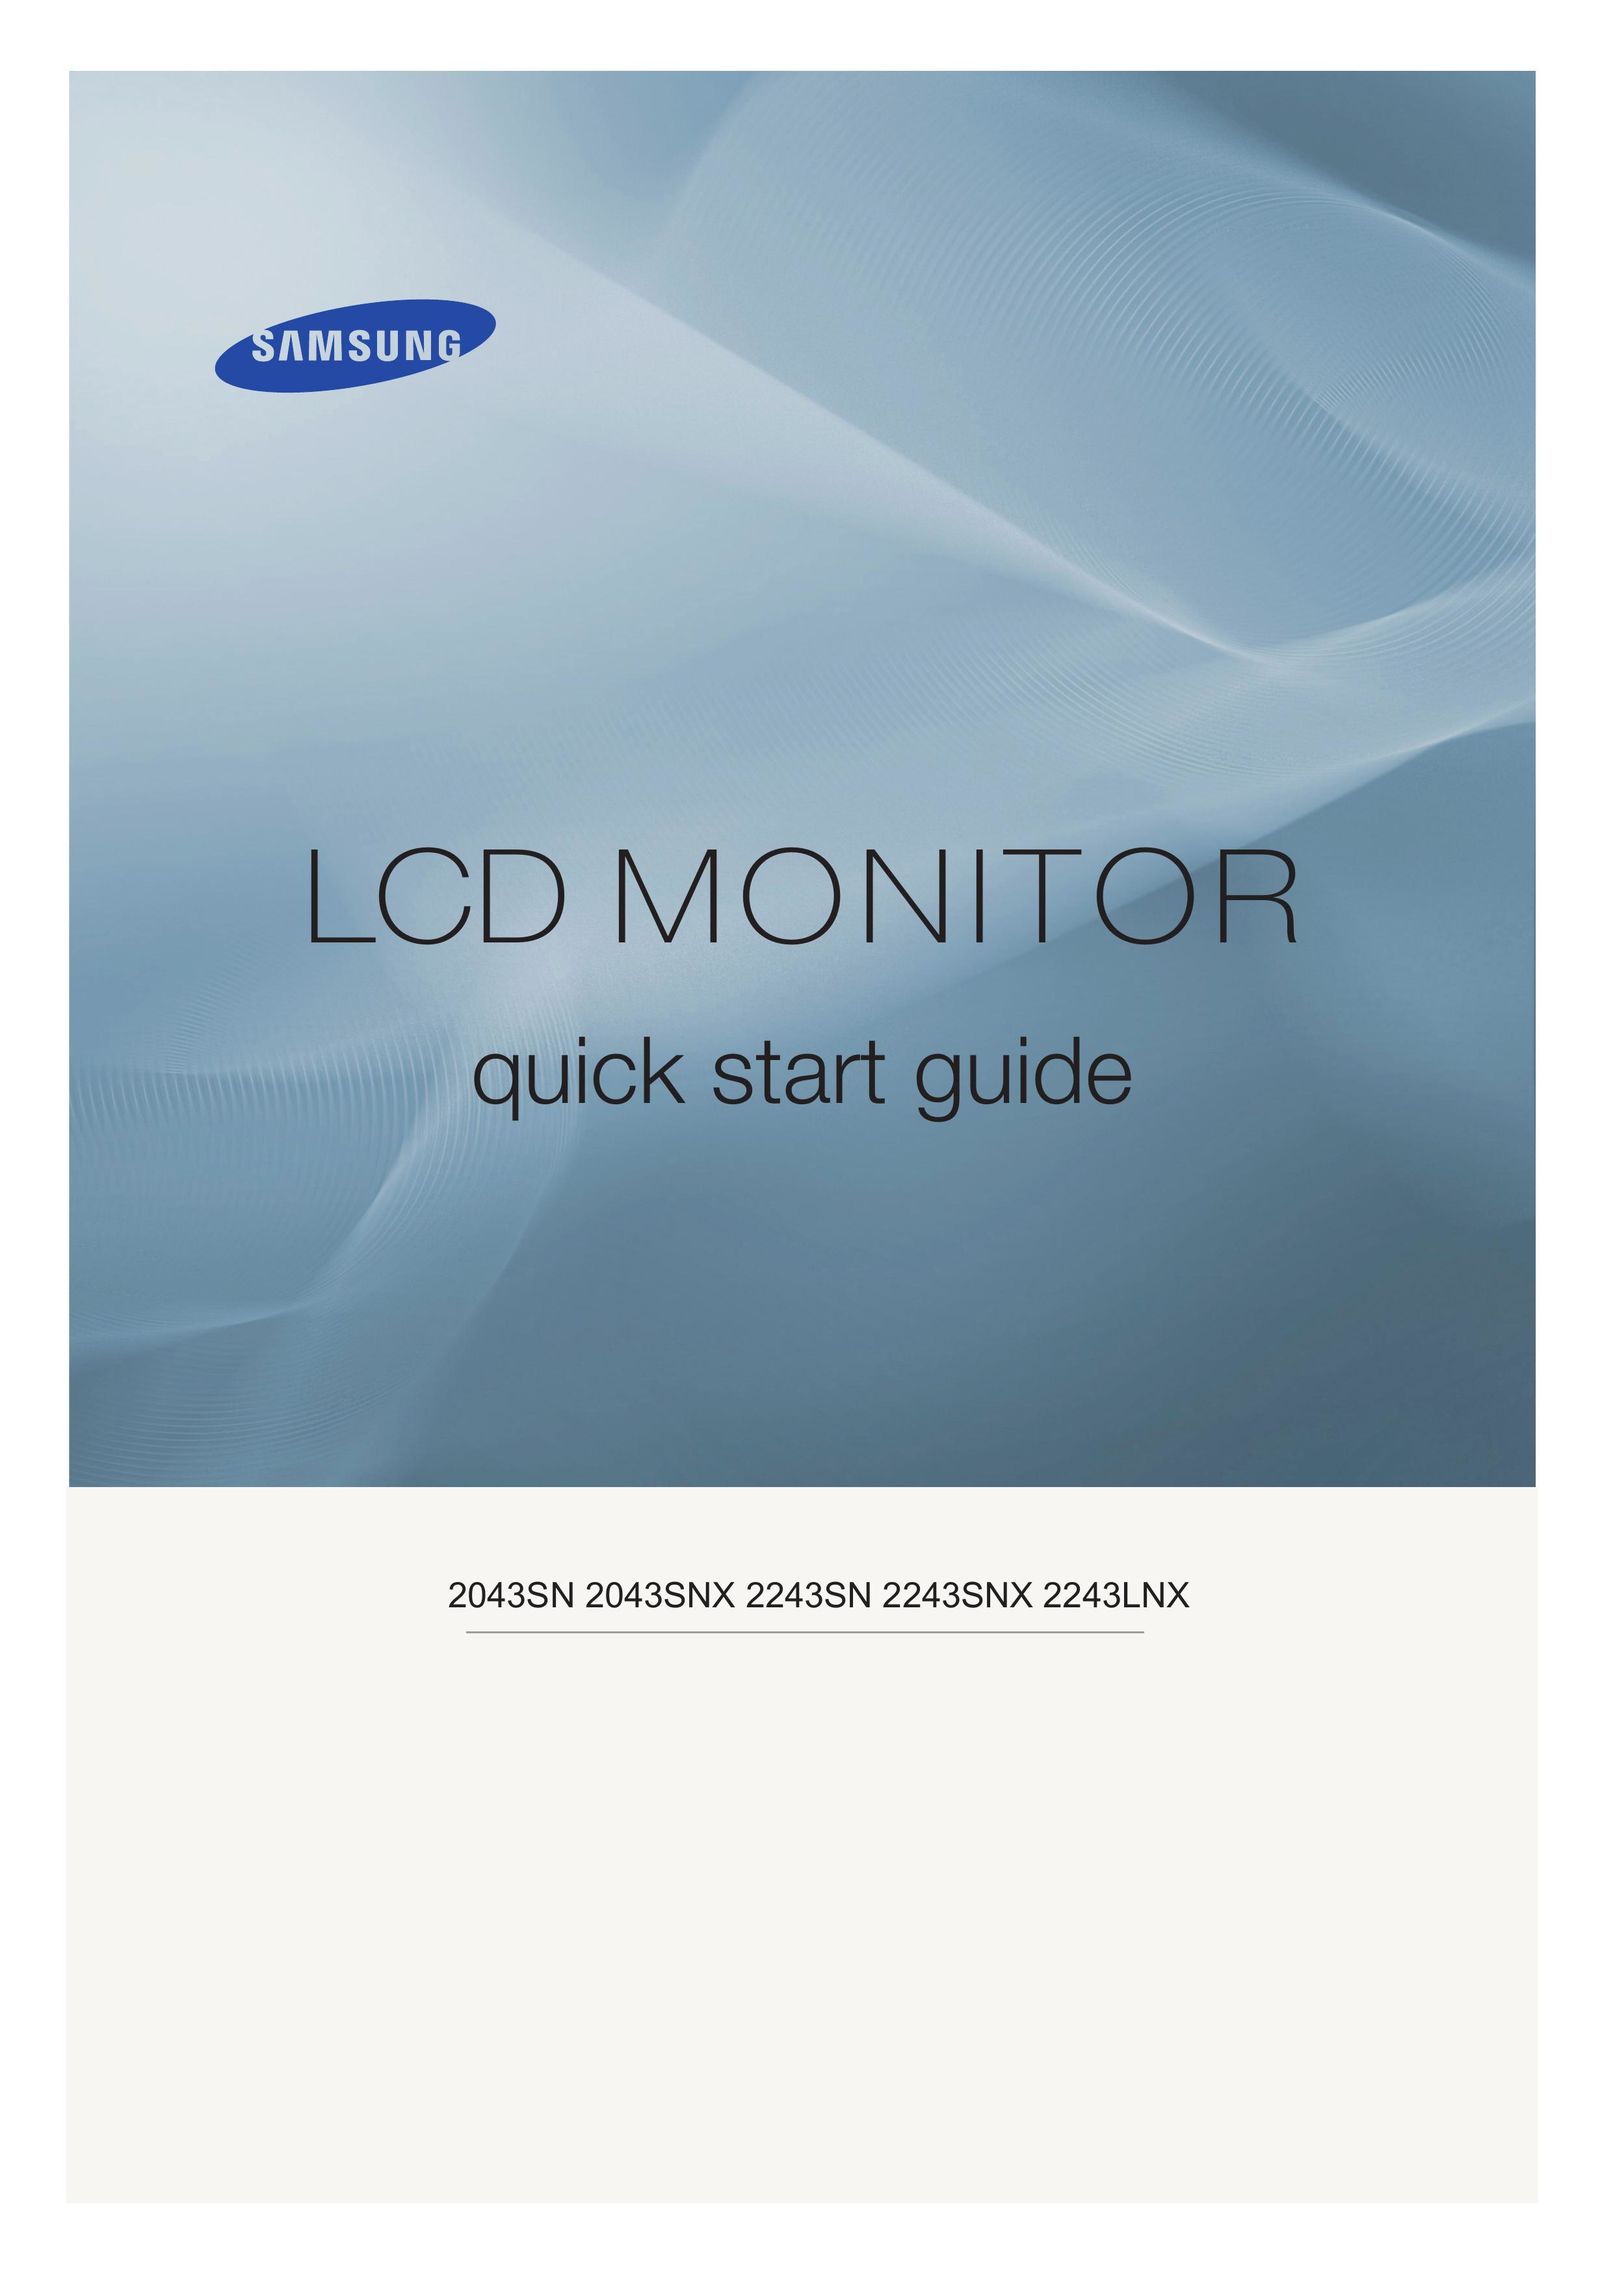 Samsung 2243SN Car Video System User Manual